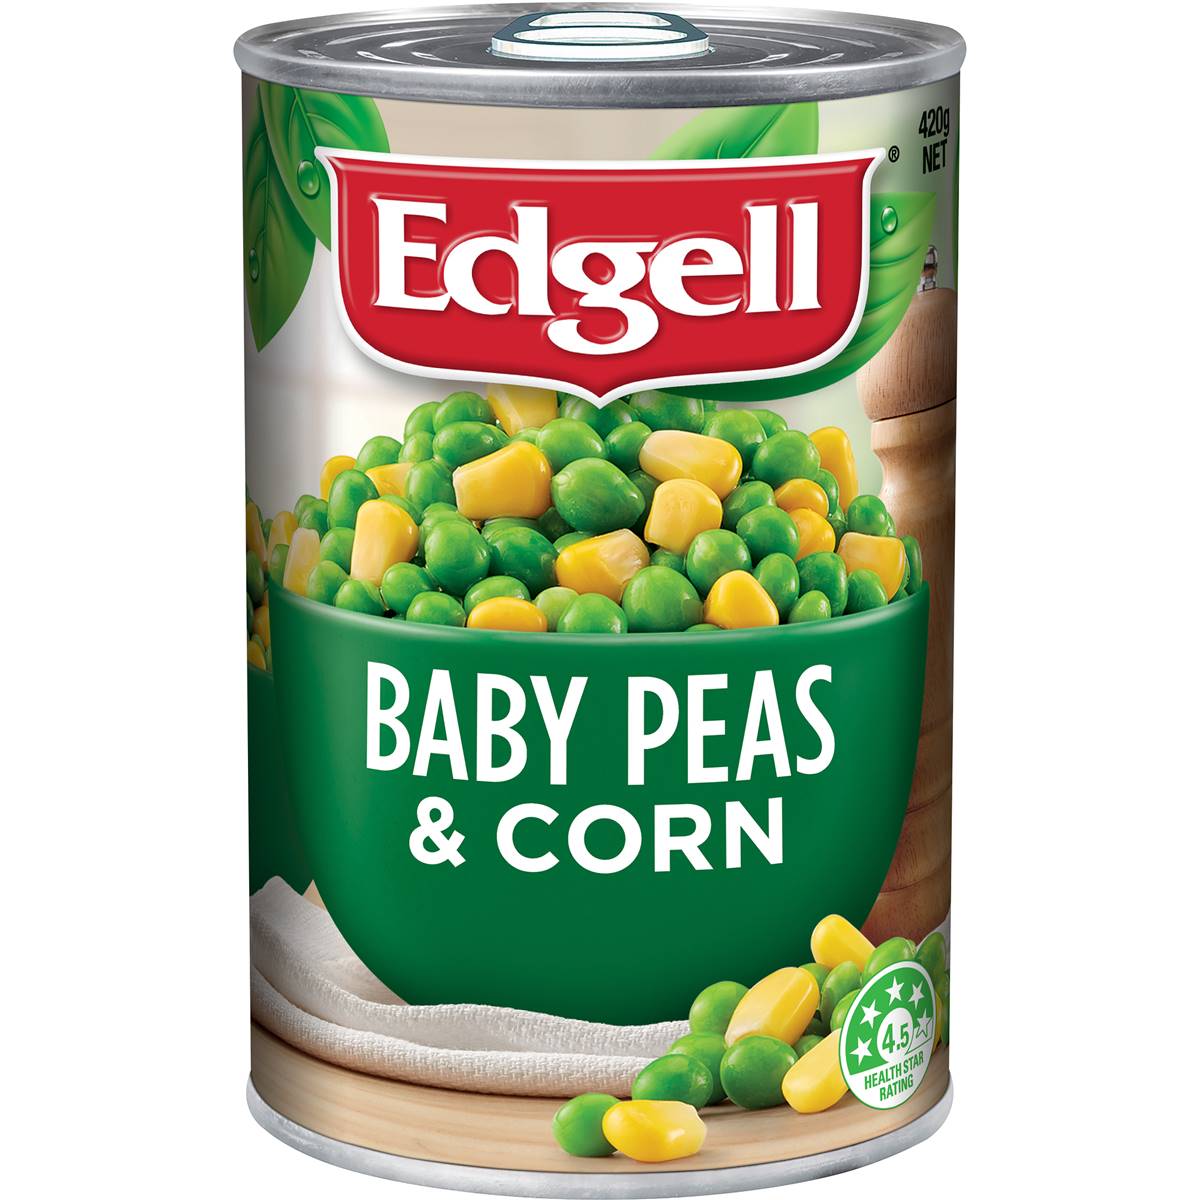 Calories in Edgell Baby Peas & Corn Baby Peas & Super Sweet Corn